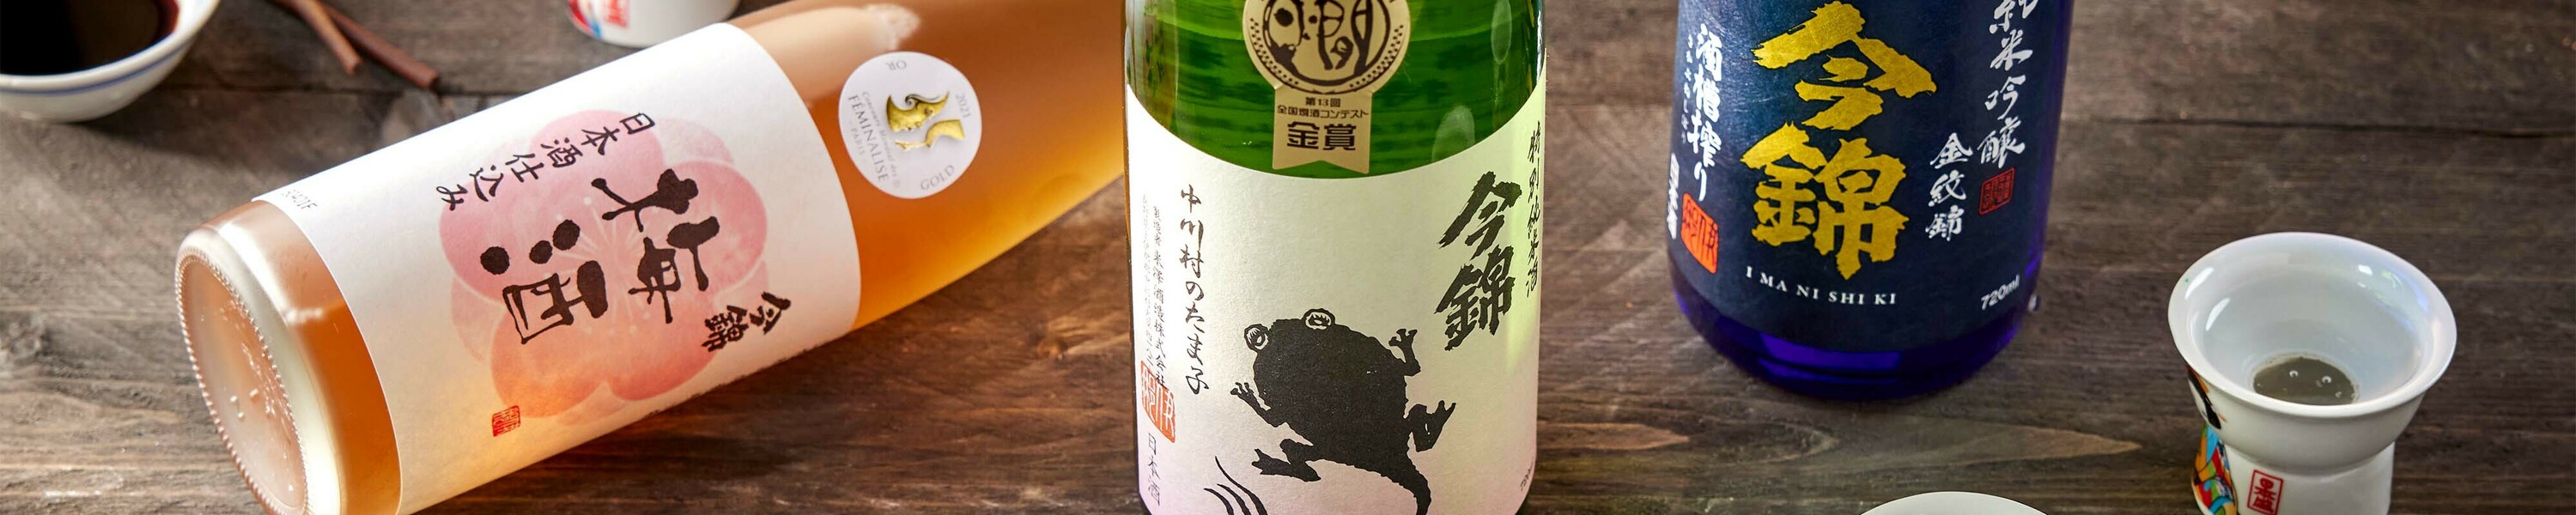 Japan: traditionele saké